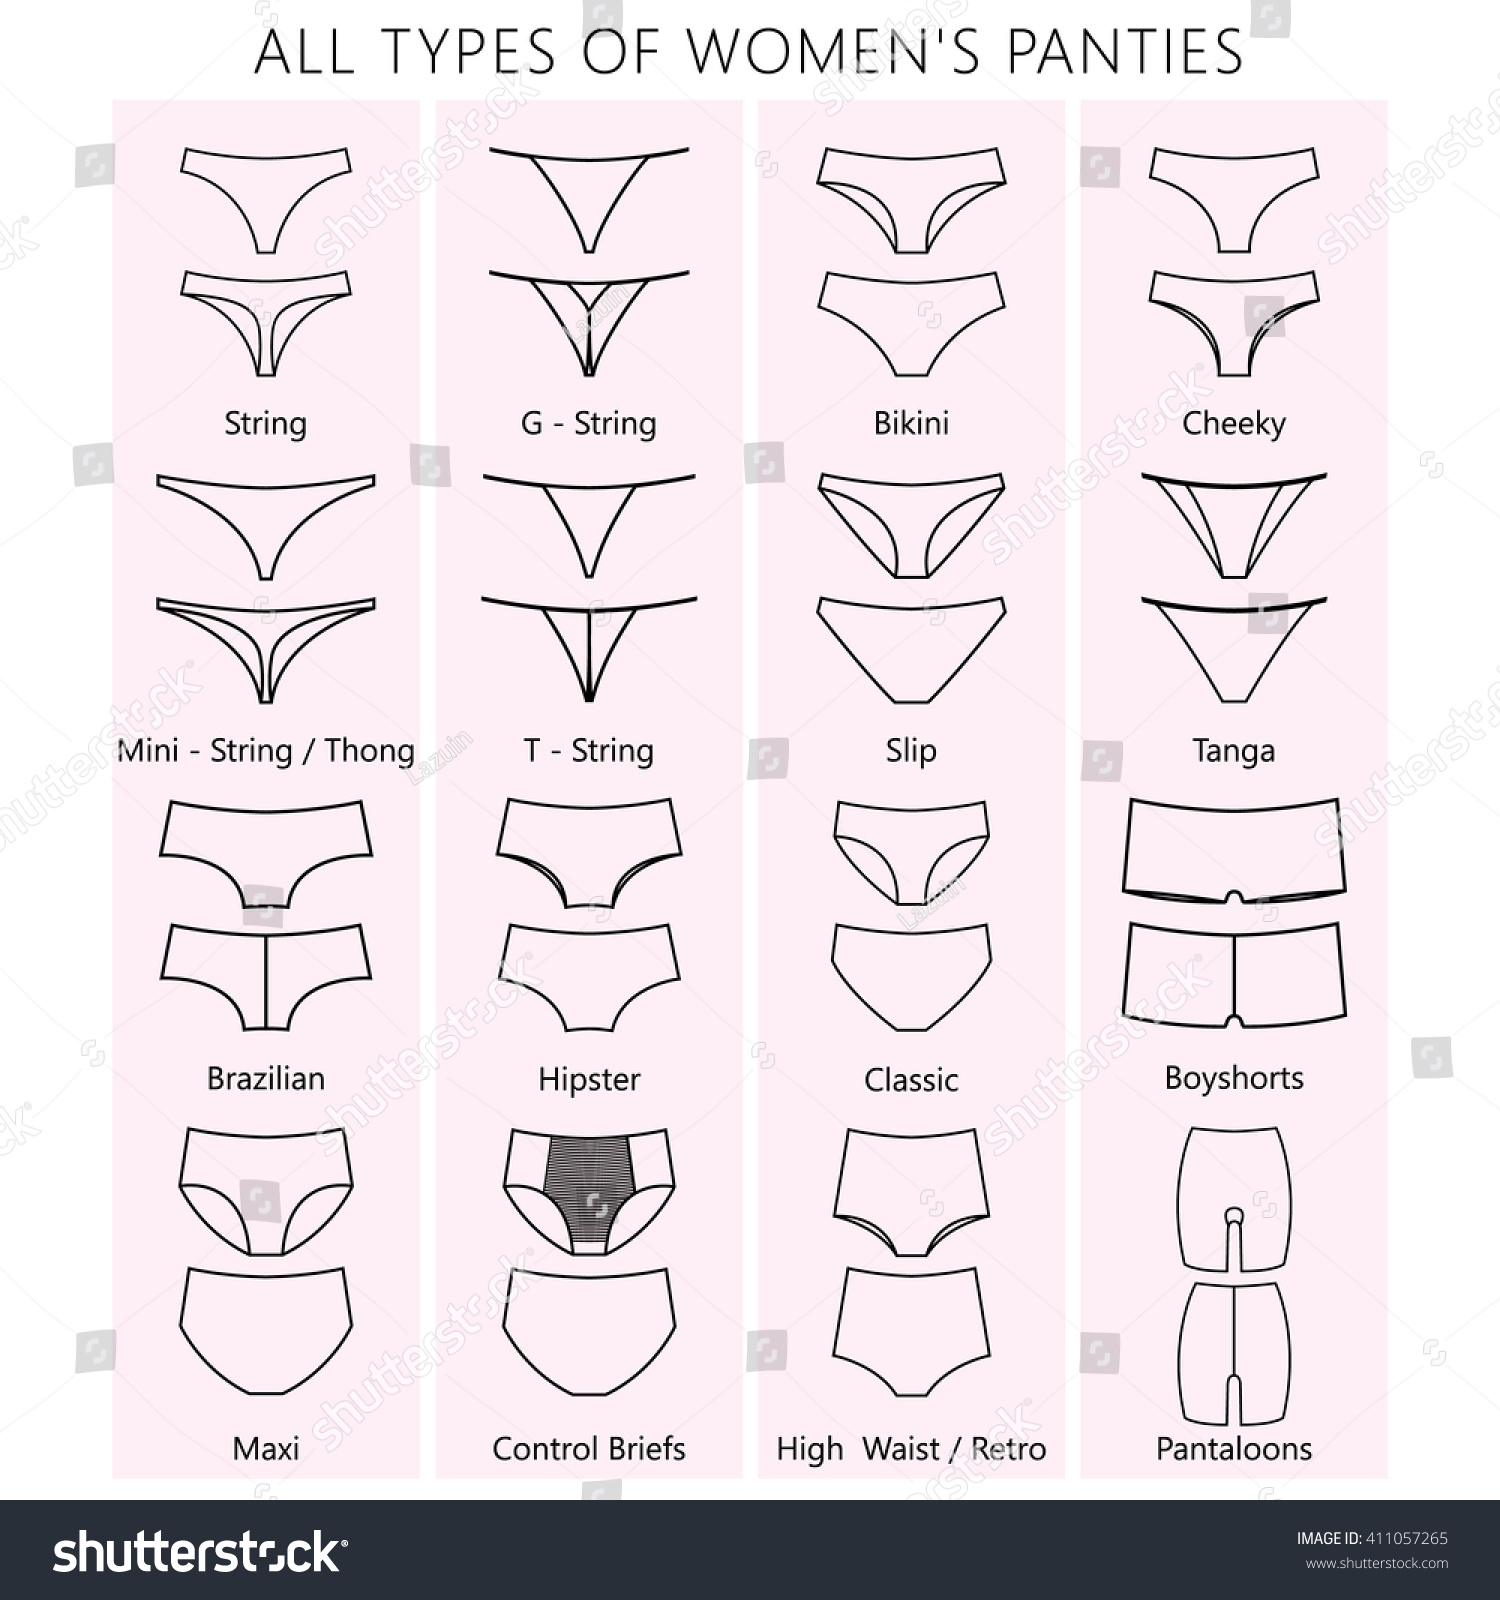 All Types Of Panties 119